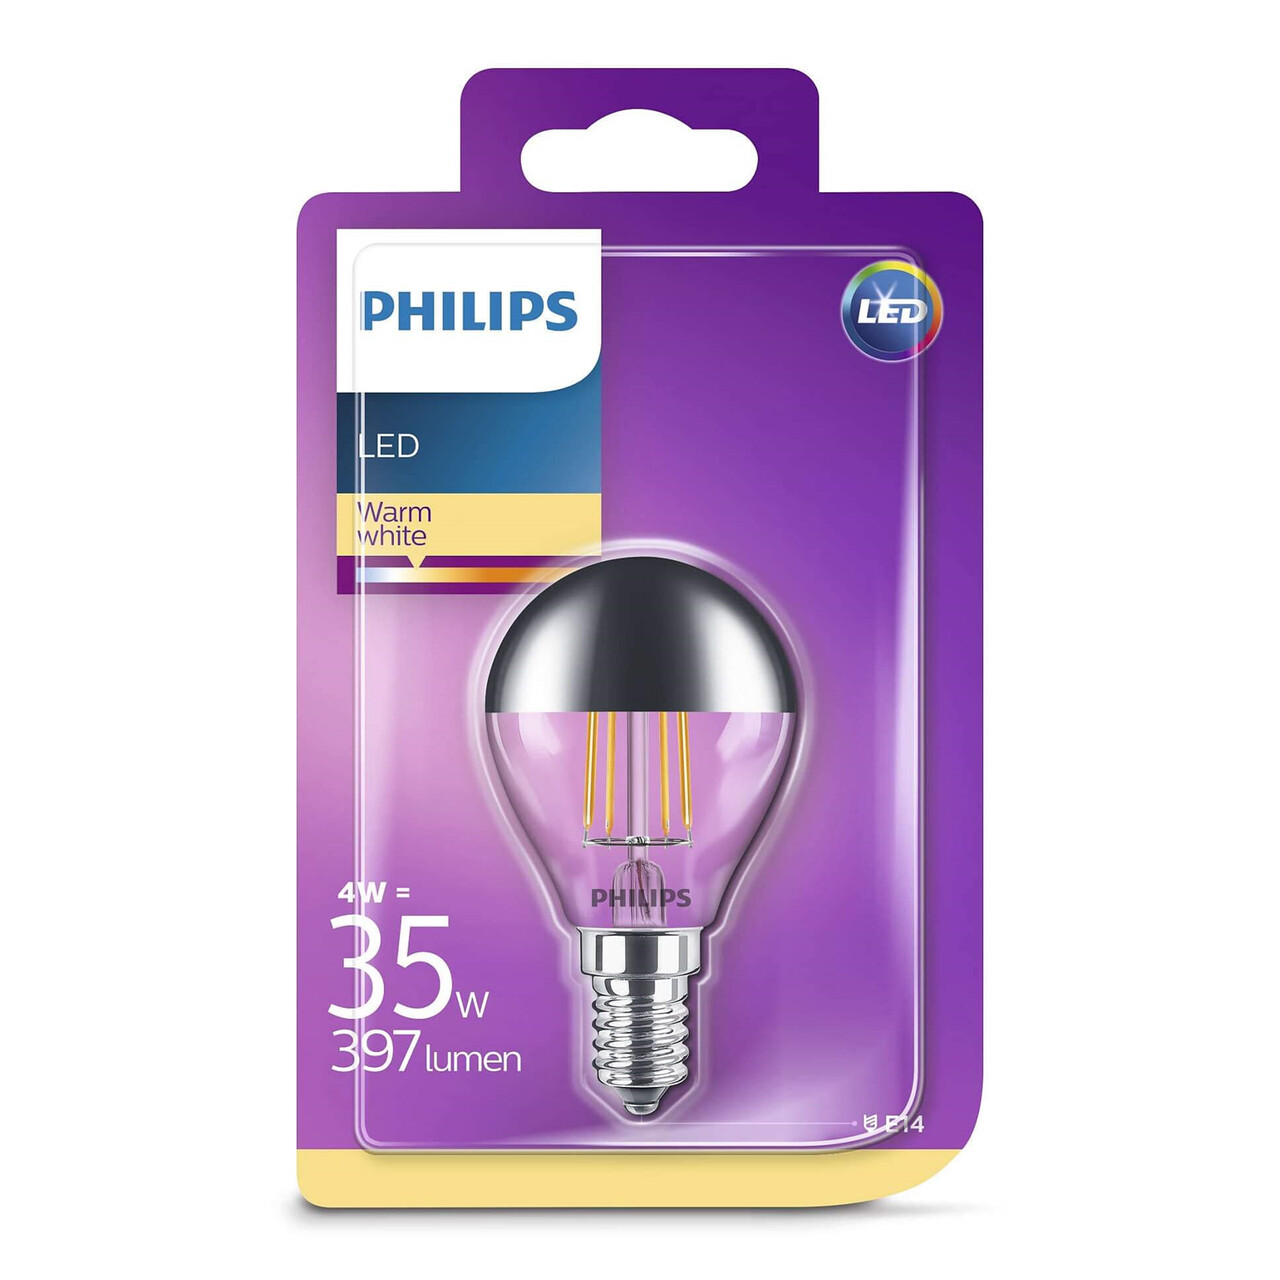 Led Daily Light 4 Philips. Philips 4g